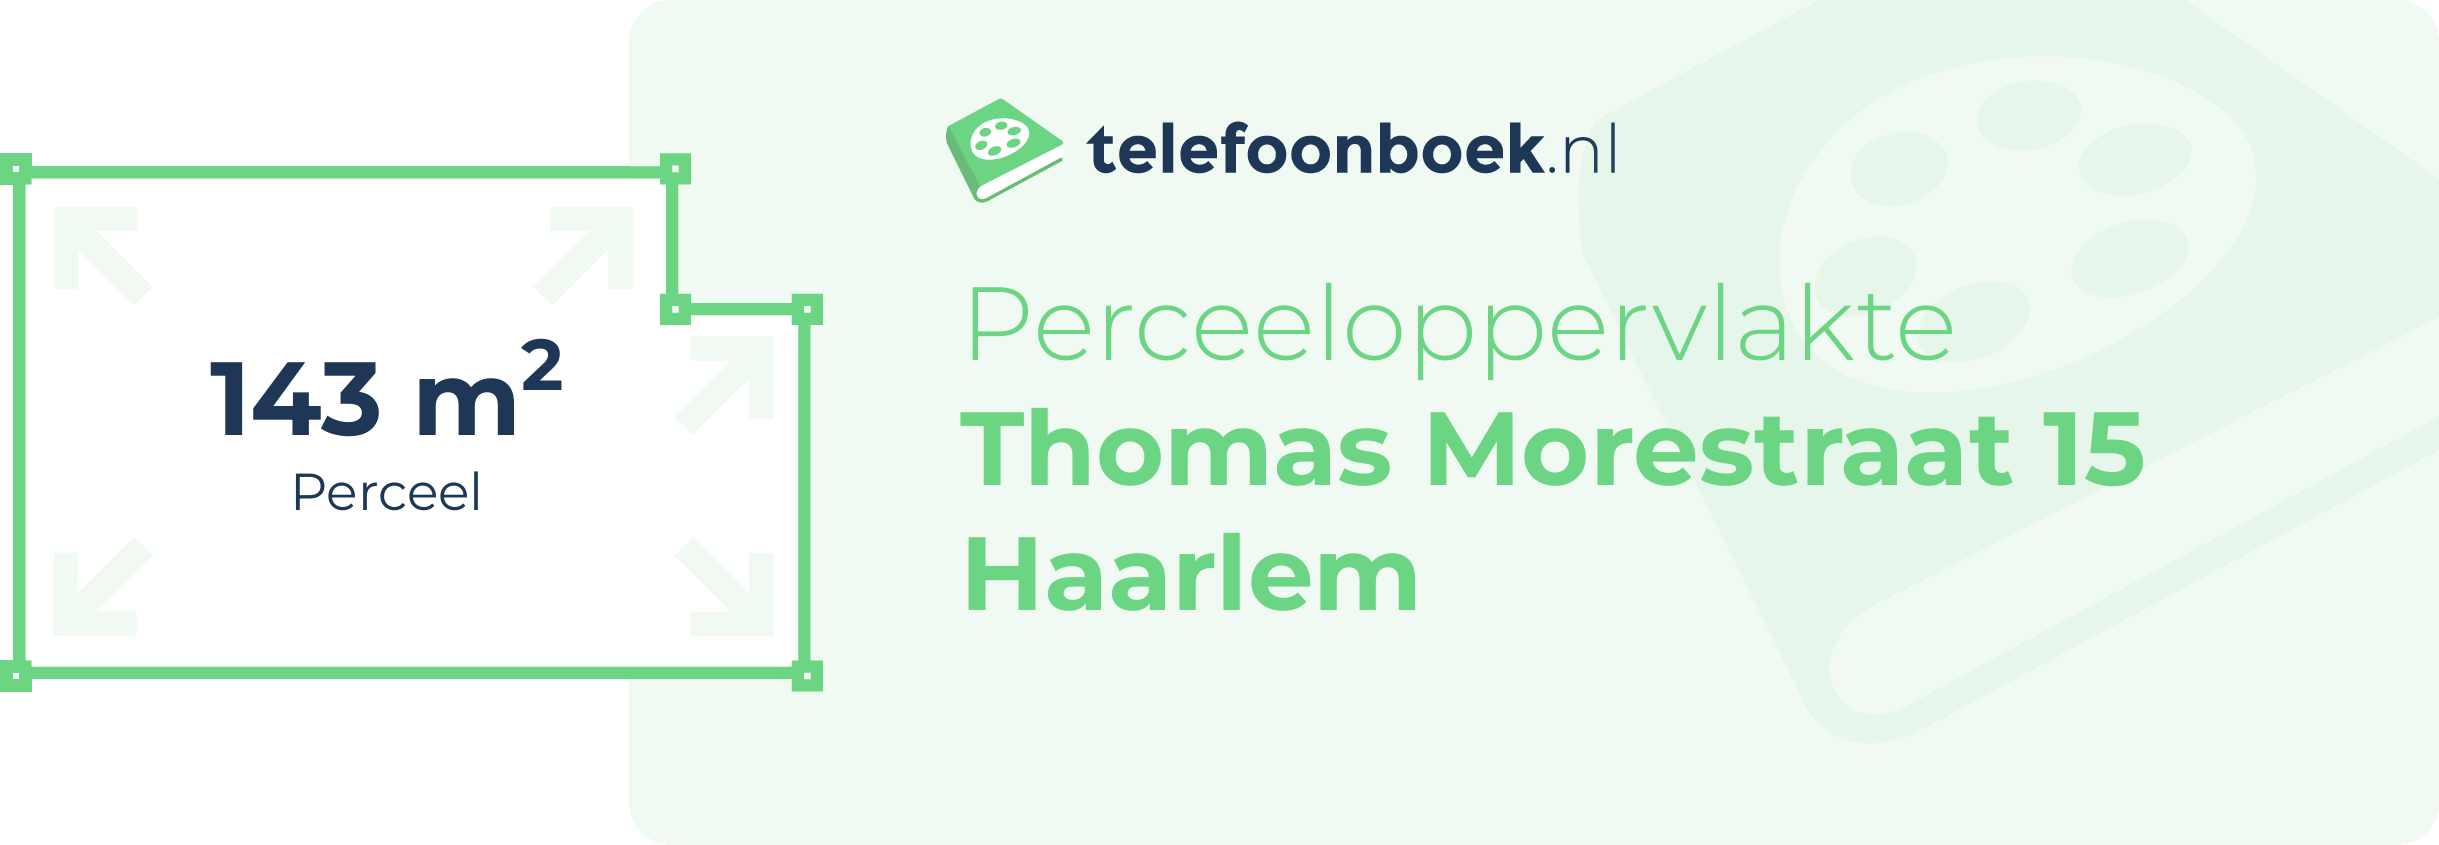 Perceeloppervlakte Thomas Morestraat 15 Haarlem